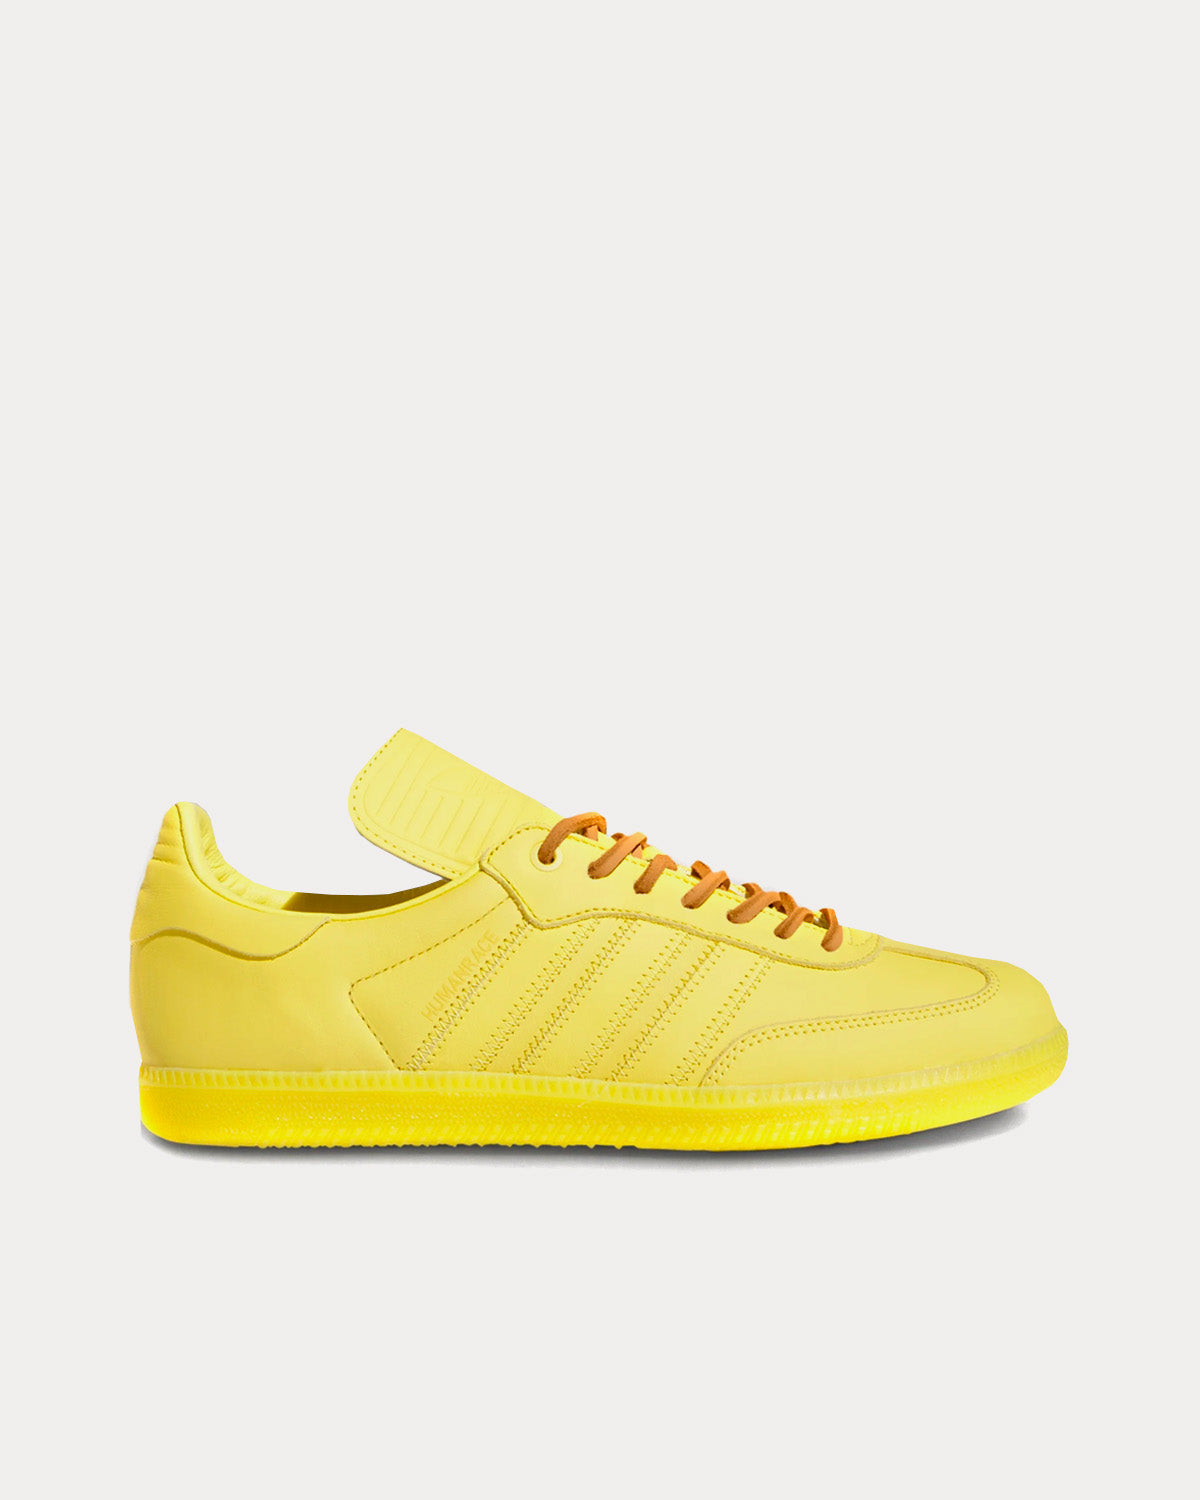 Adidas x Humanrace - Samba Yellow Low Top Sneakers